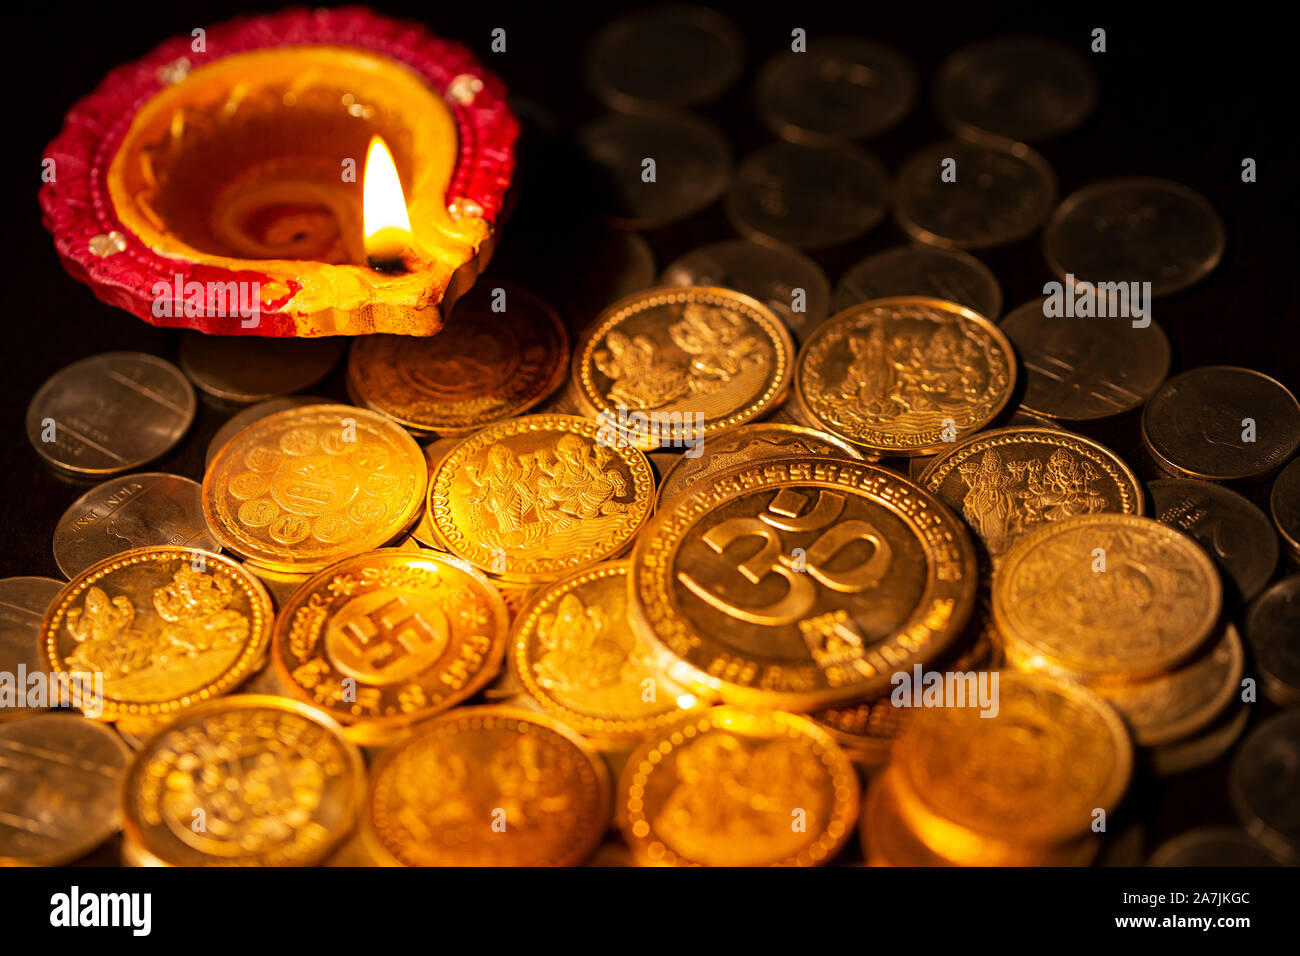 Diwali Diya Oil-lamp With Gold Coins During Diwali festival Celebration Stock Photo